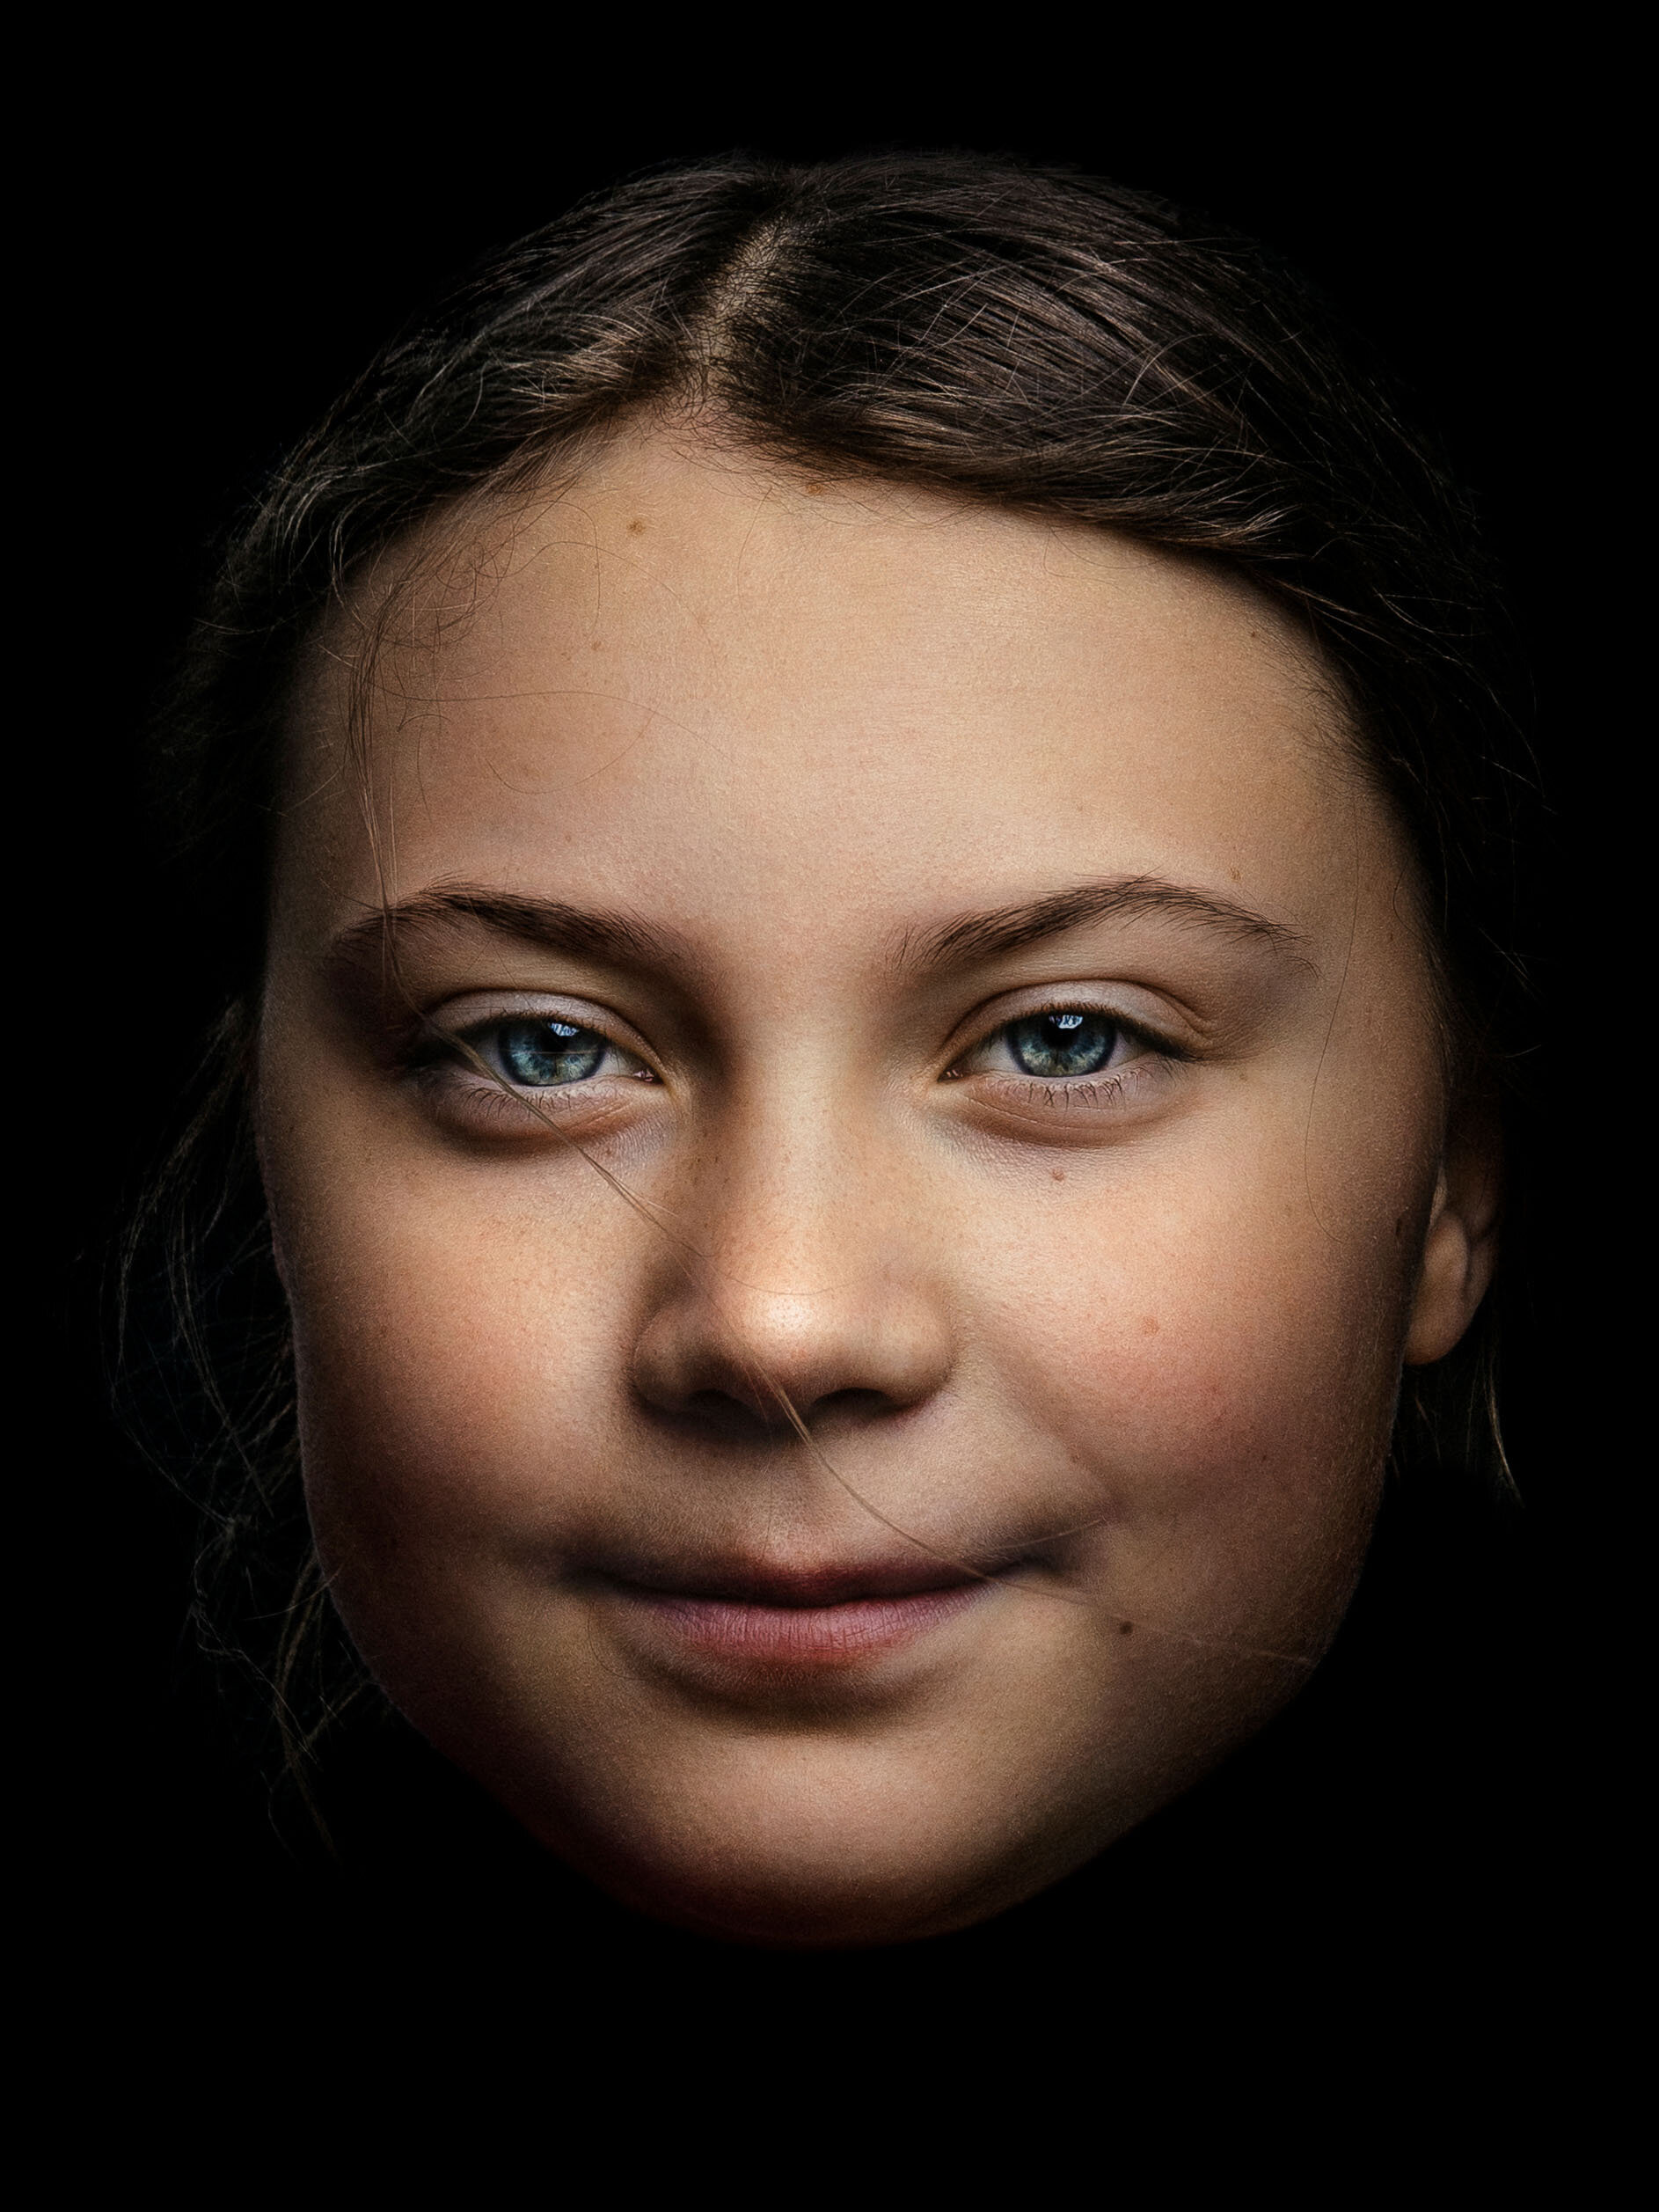 Greta-Thunberg+Portrait+Jan-Frankl.jpg